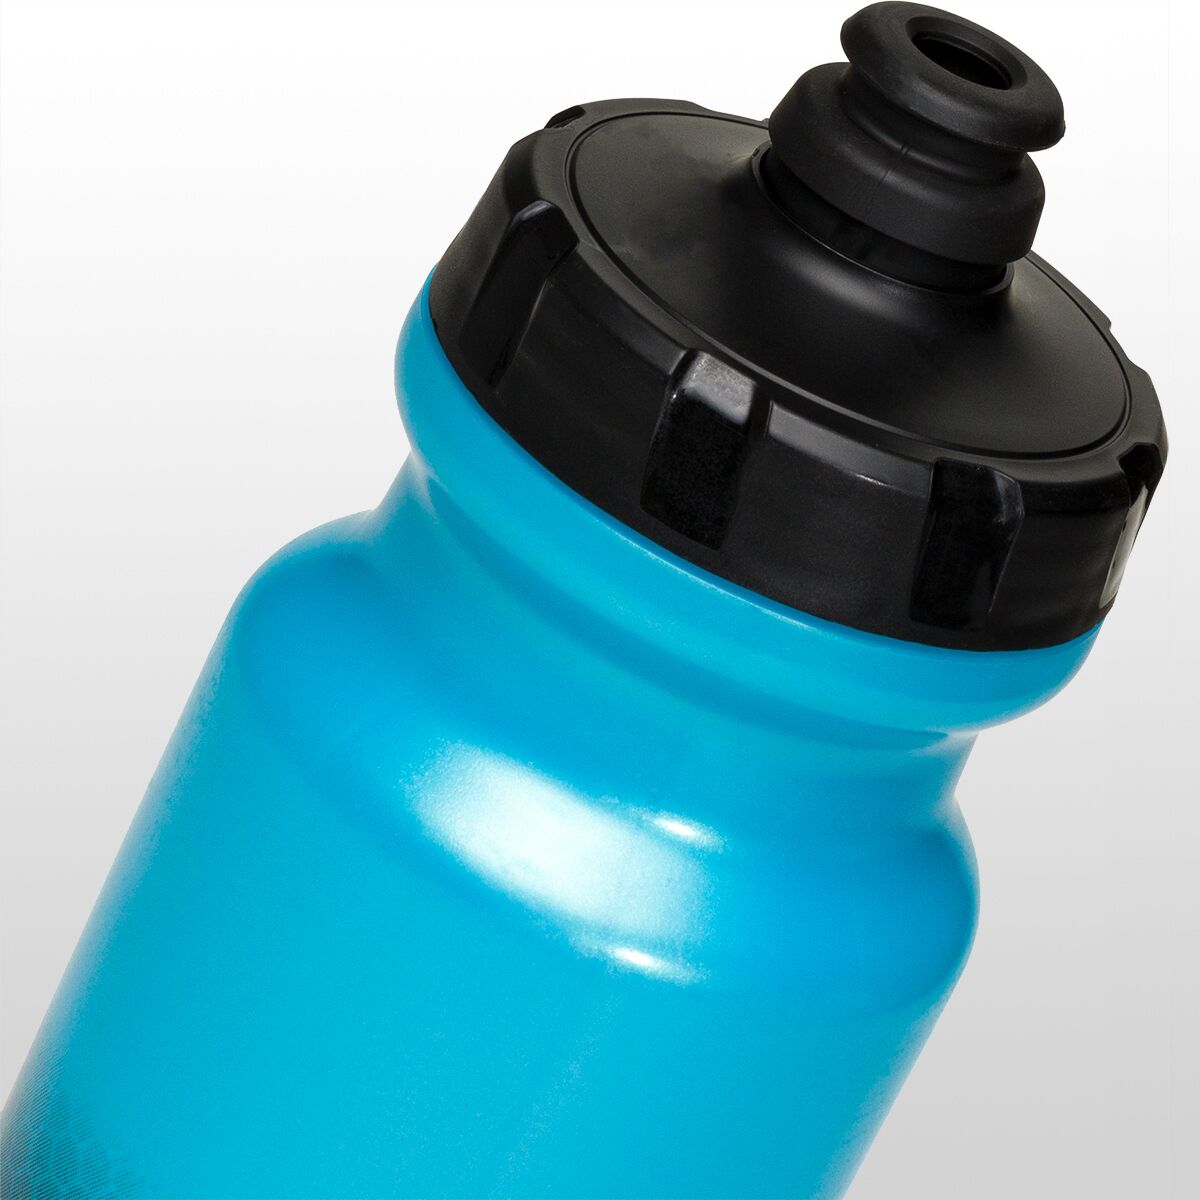 Specialized Purist WaterGate Water Bottle - Las Vegas Cyclery, Las Vegas,  Nevada 89135